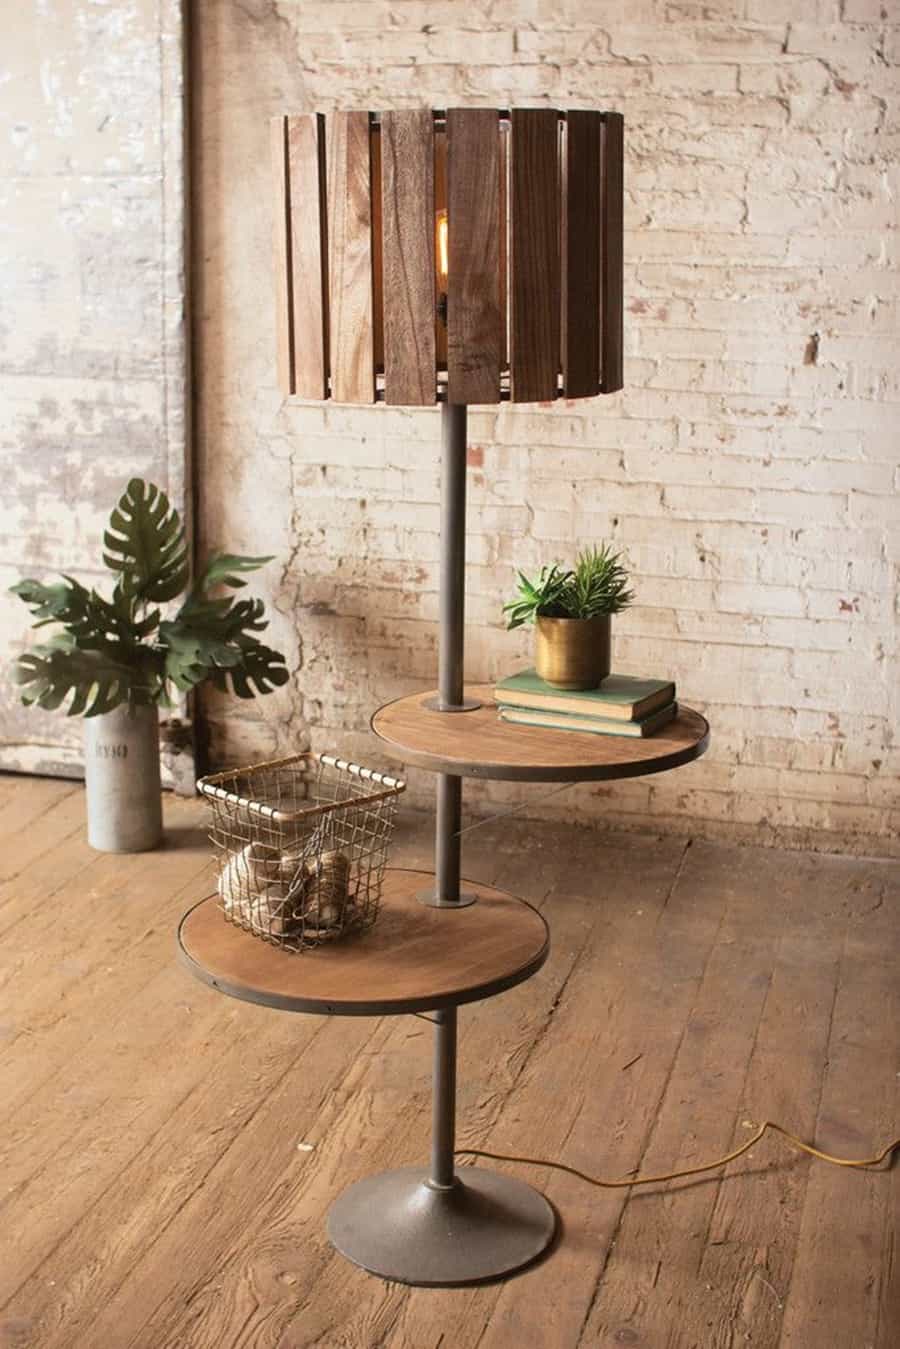 DIY Rustic Floor Lamp with Shelves